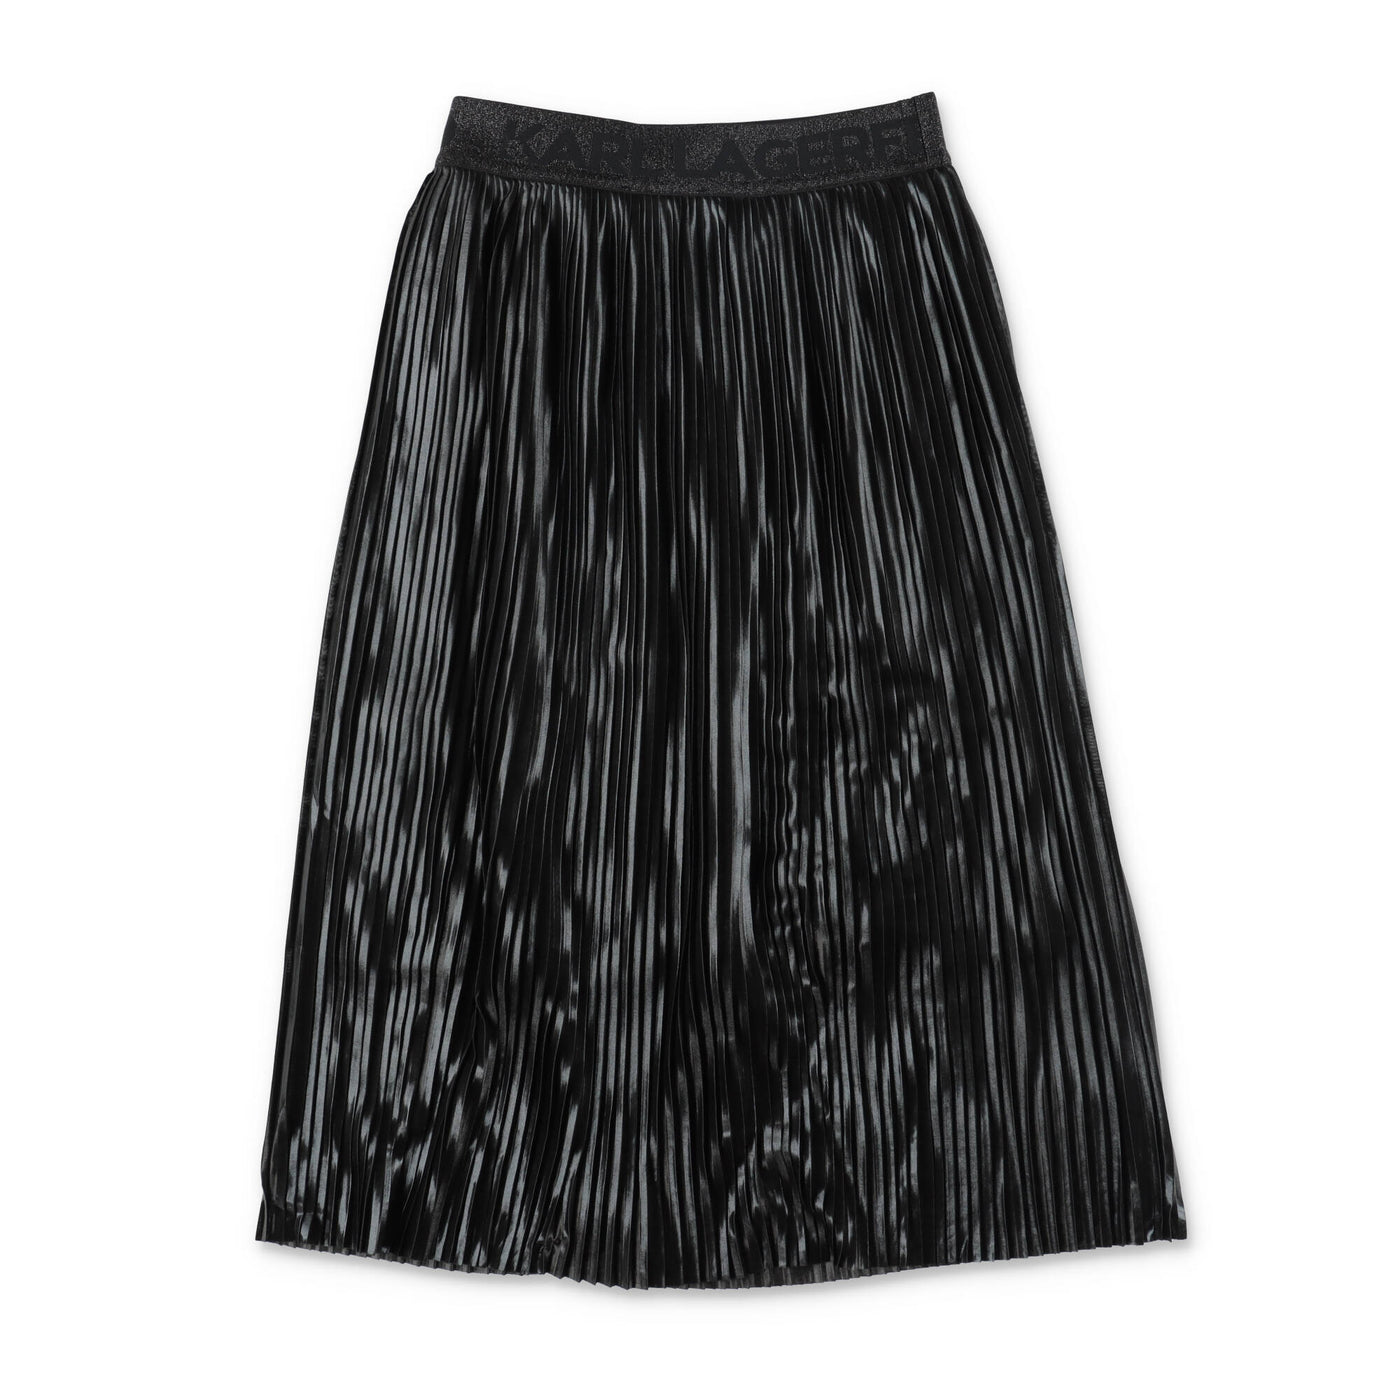 Metal black techno fabric pleated girl KARL LAGERFELD skirt | Carofiglio Junior